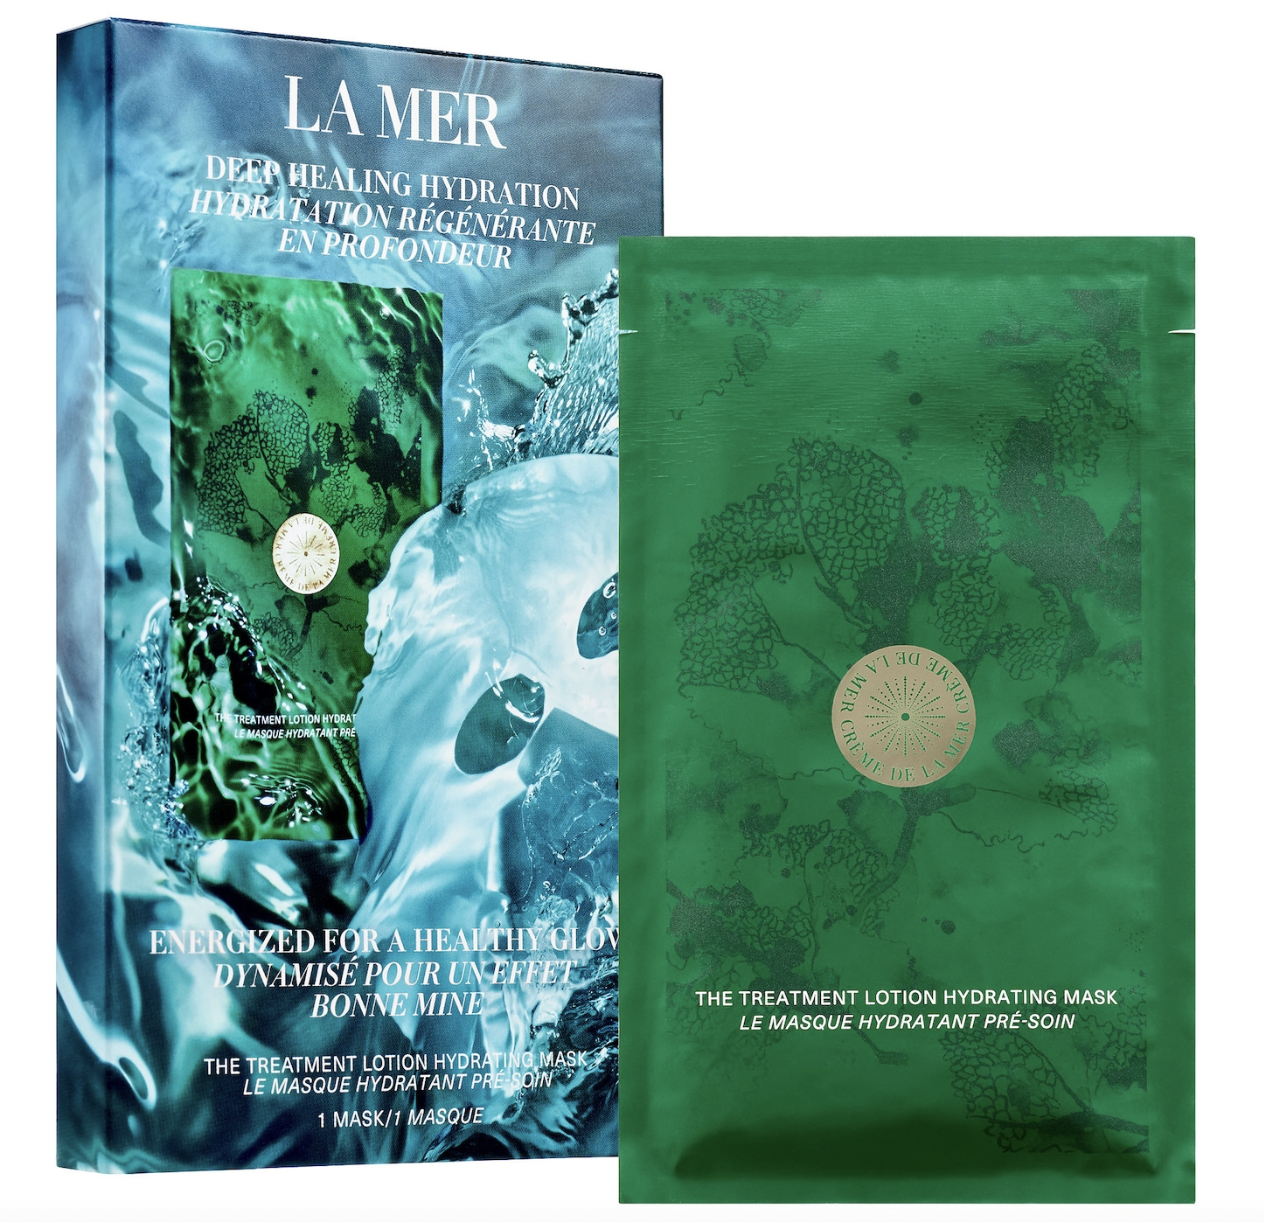 La Mer Treatment Lotion Hydrating Mask $35